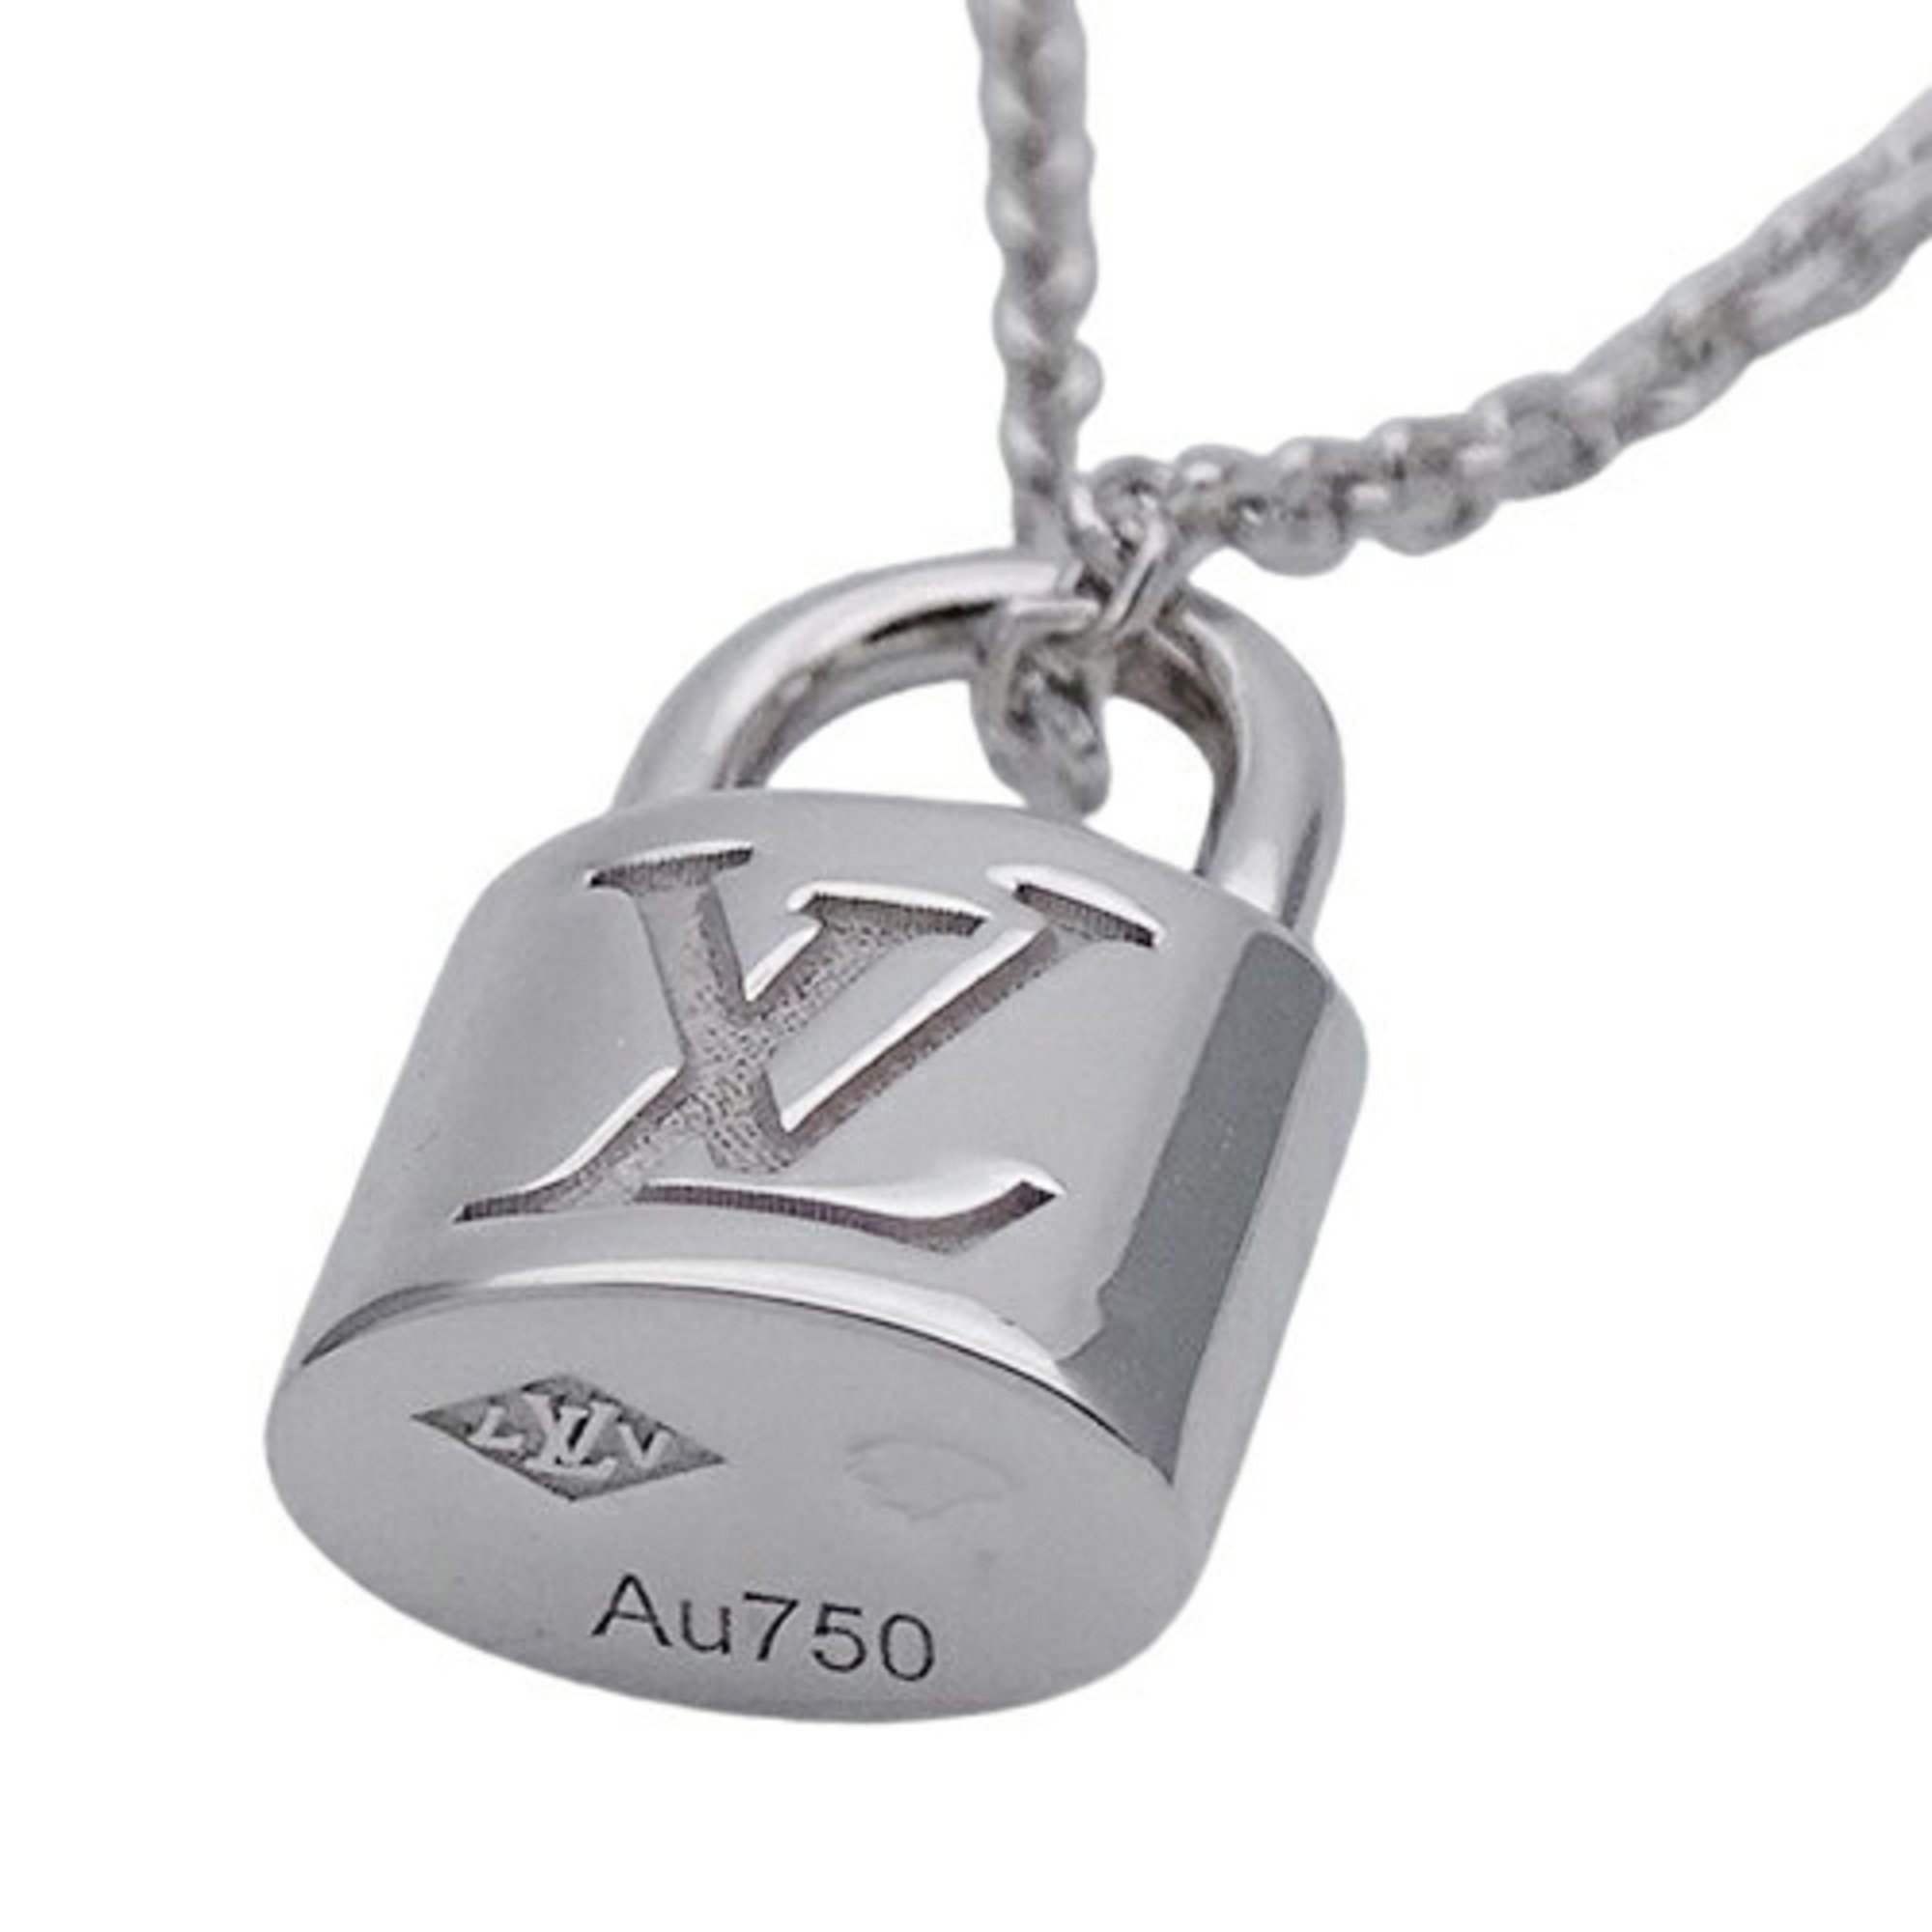 Louis Vuitton LOUIS VUITTON Necklace for Women 750WG Pendant Lockit White Gold Q93320 Polished